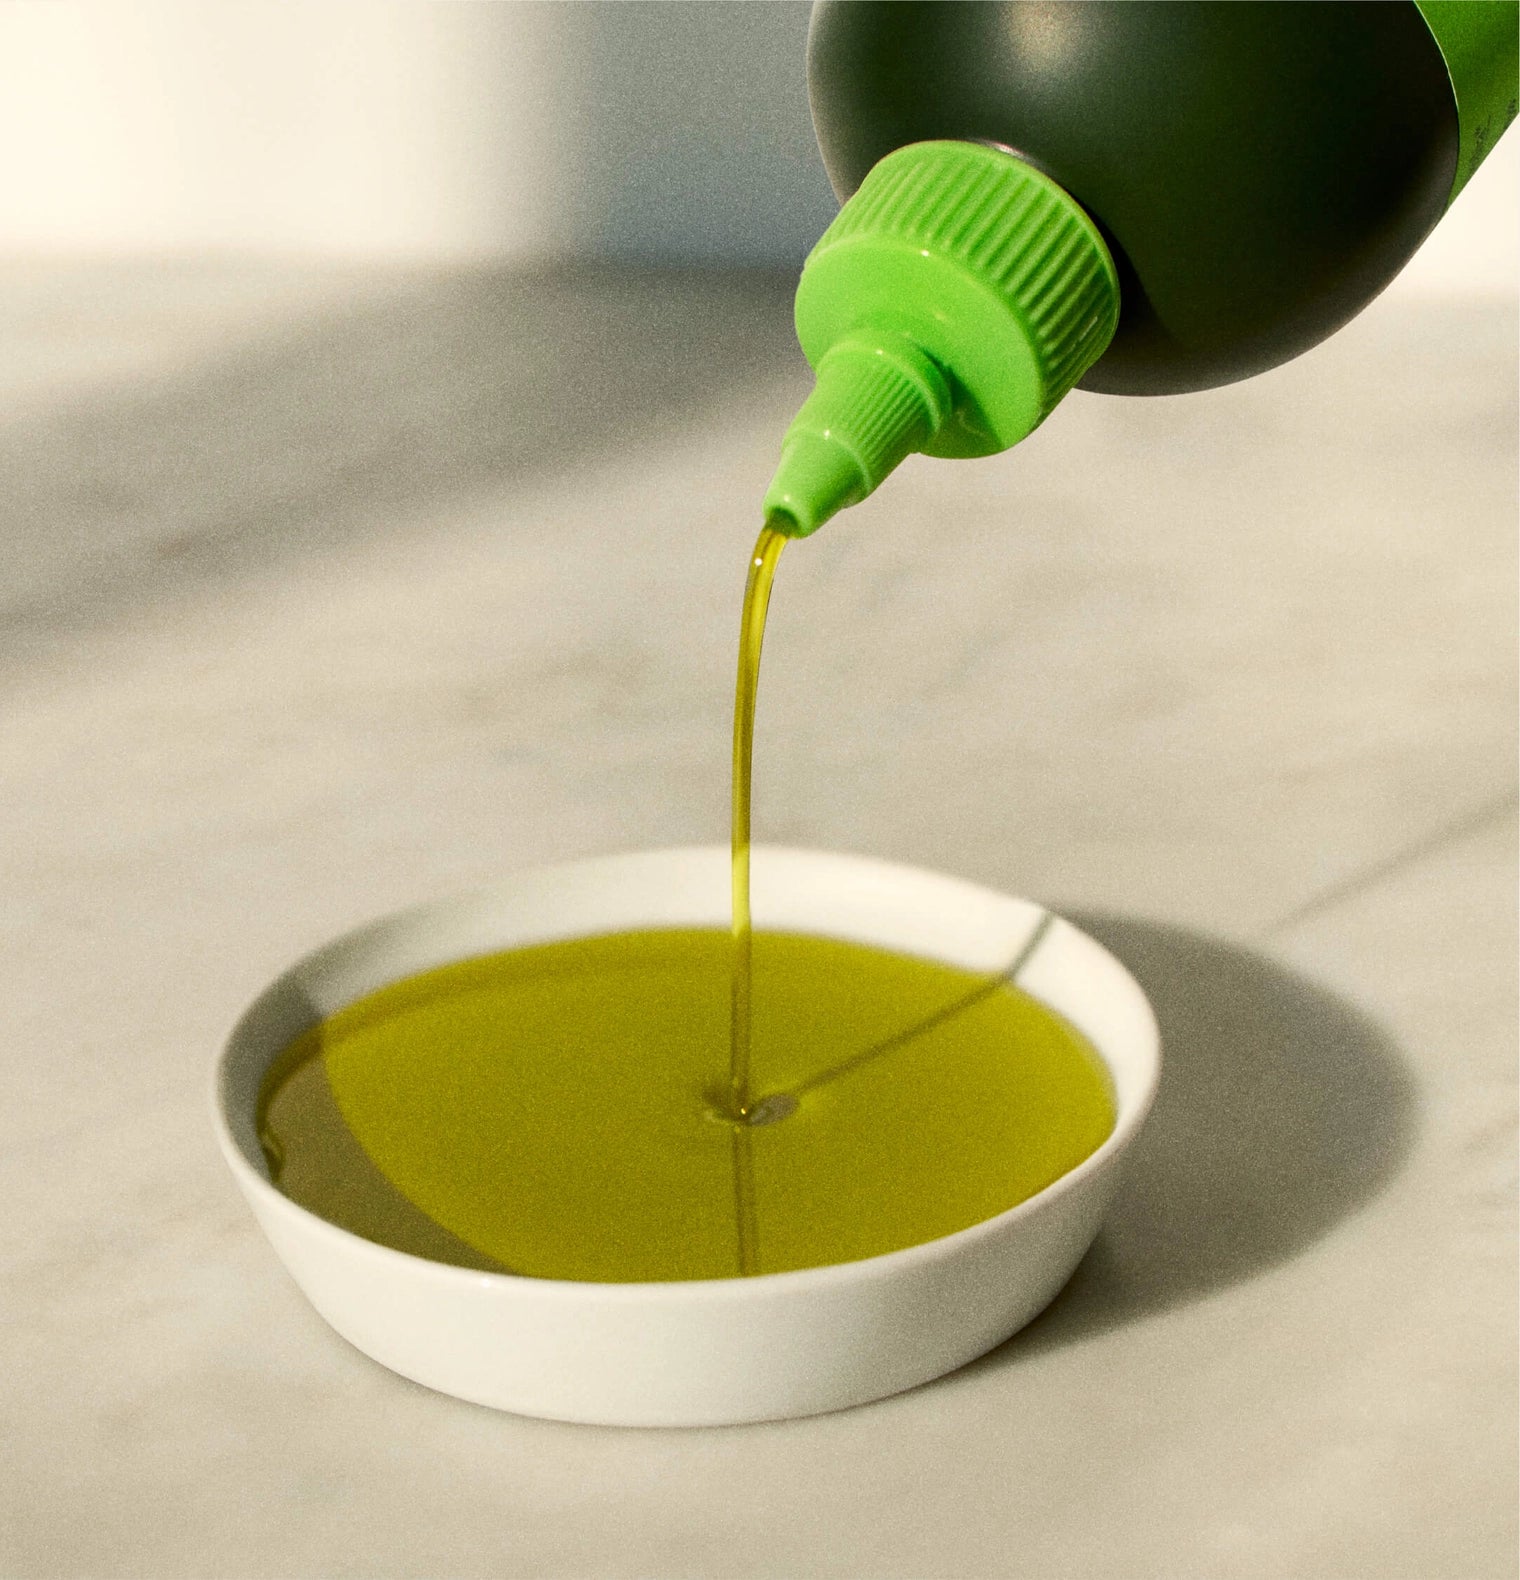 Drizzle Graza Extra Virgin Olive Oil